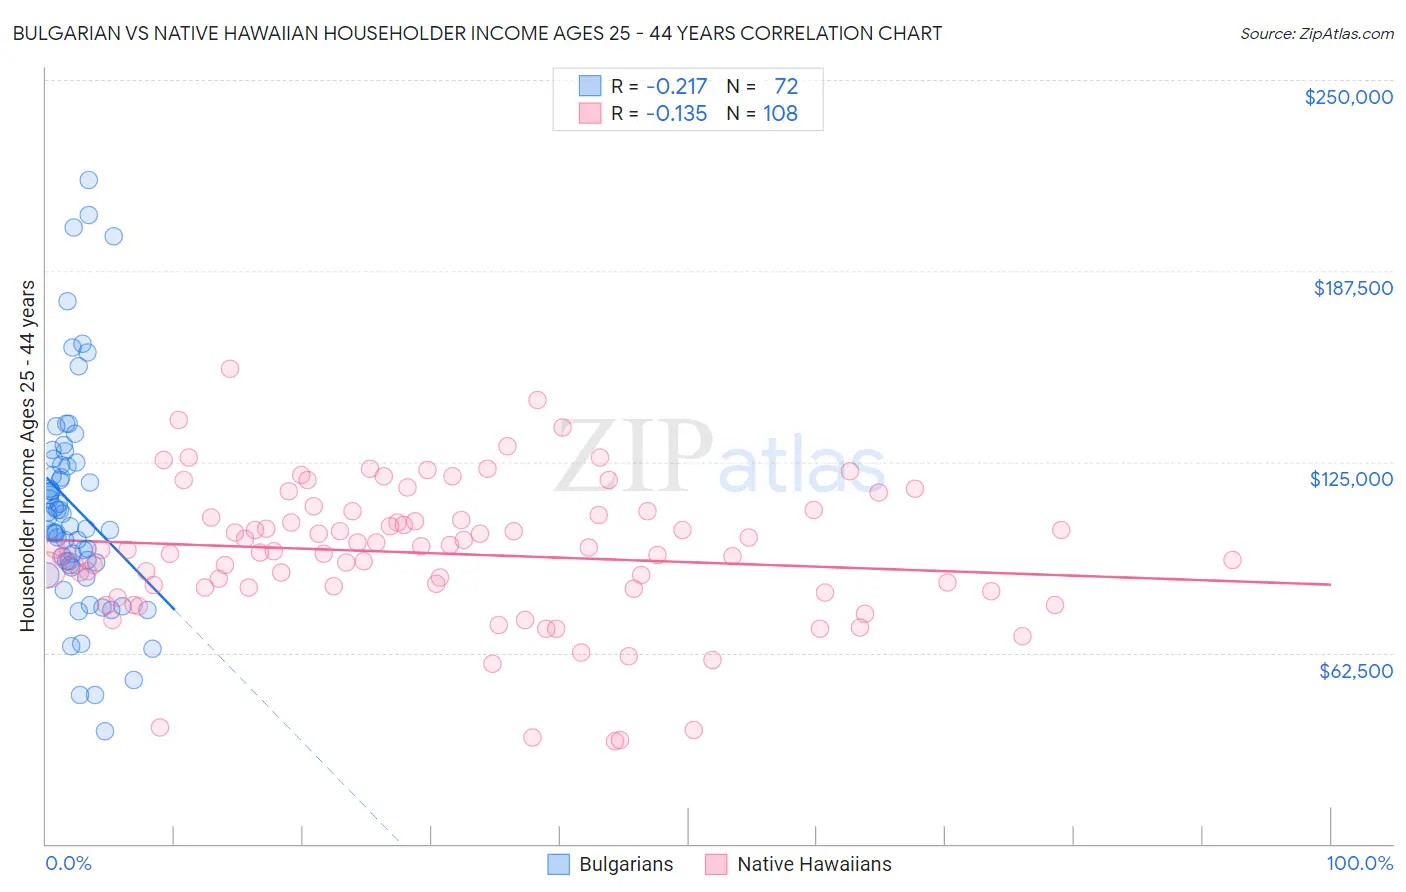 Bulgarian vs Native Hawaiian Householder Income Ages 25 - 44 years